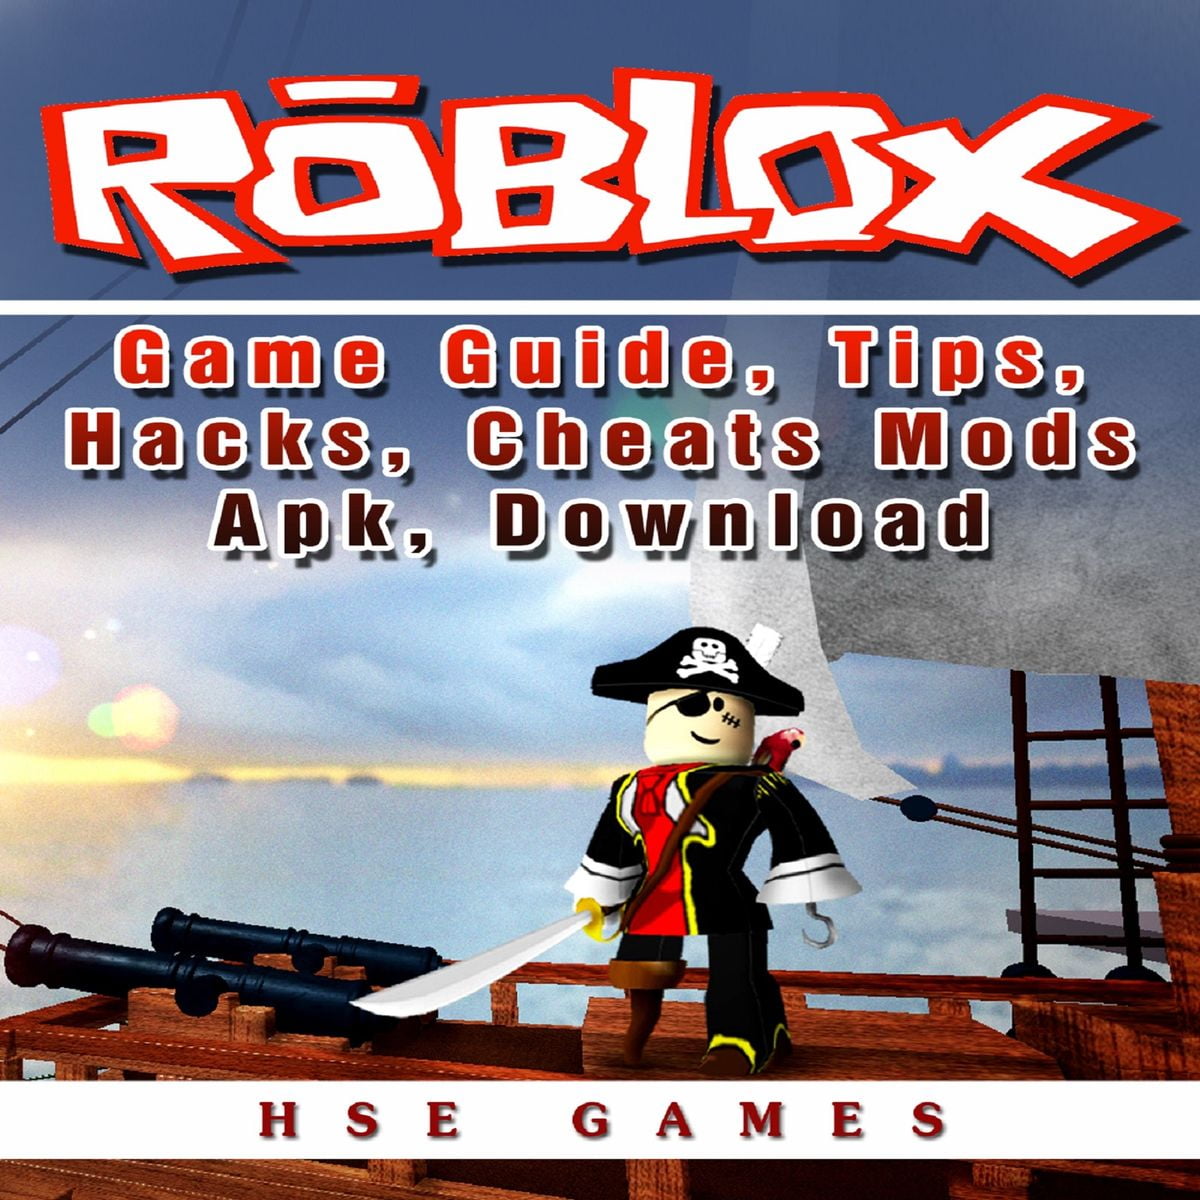 Roblox Game Guide Tips Hacks Cheats Mods Apk Download Audiobook Walmart Com Walmart Com - roblox premium guis hacks